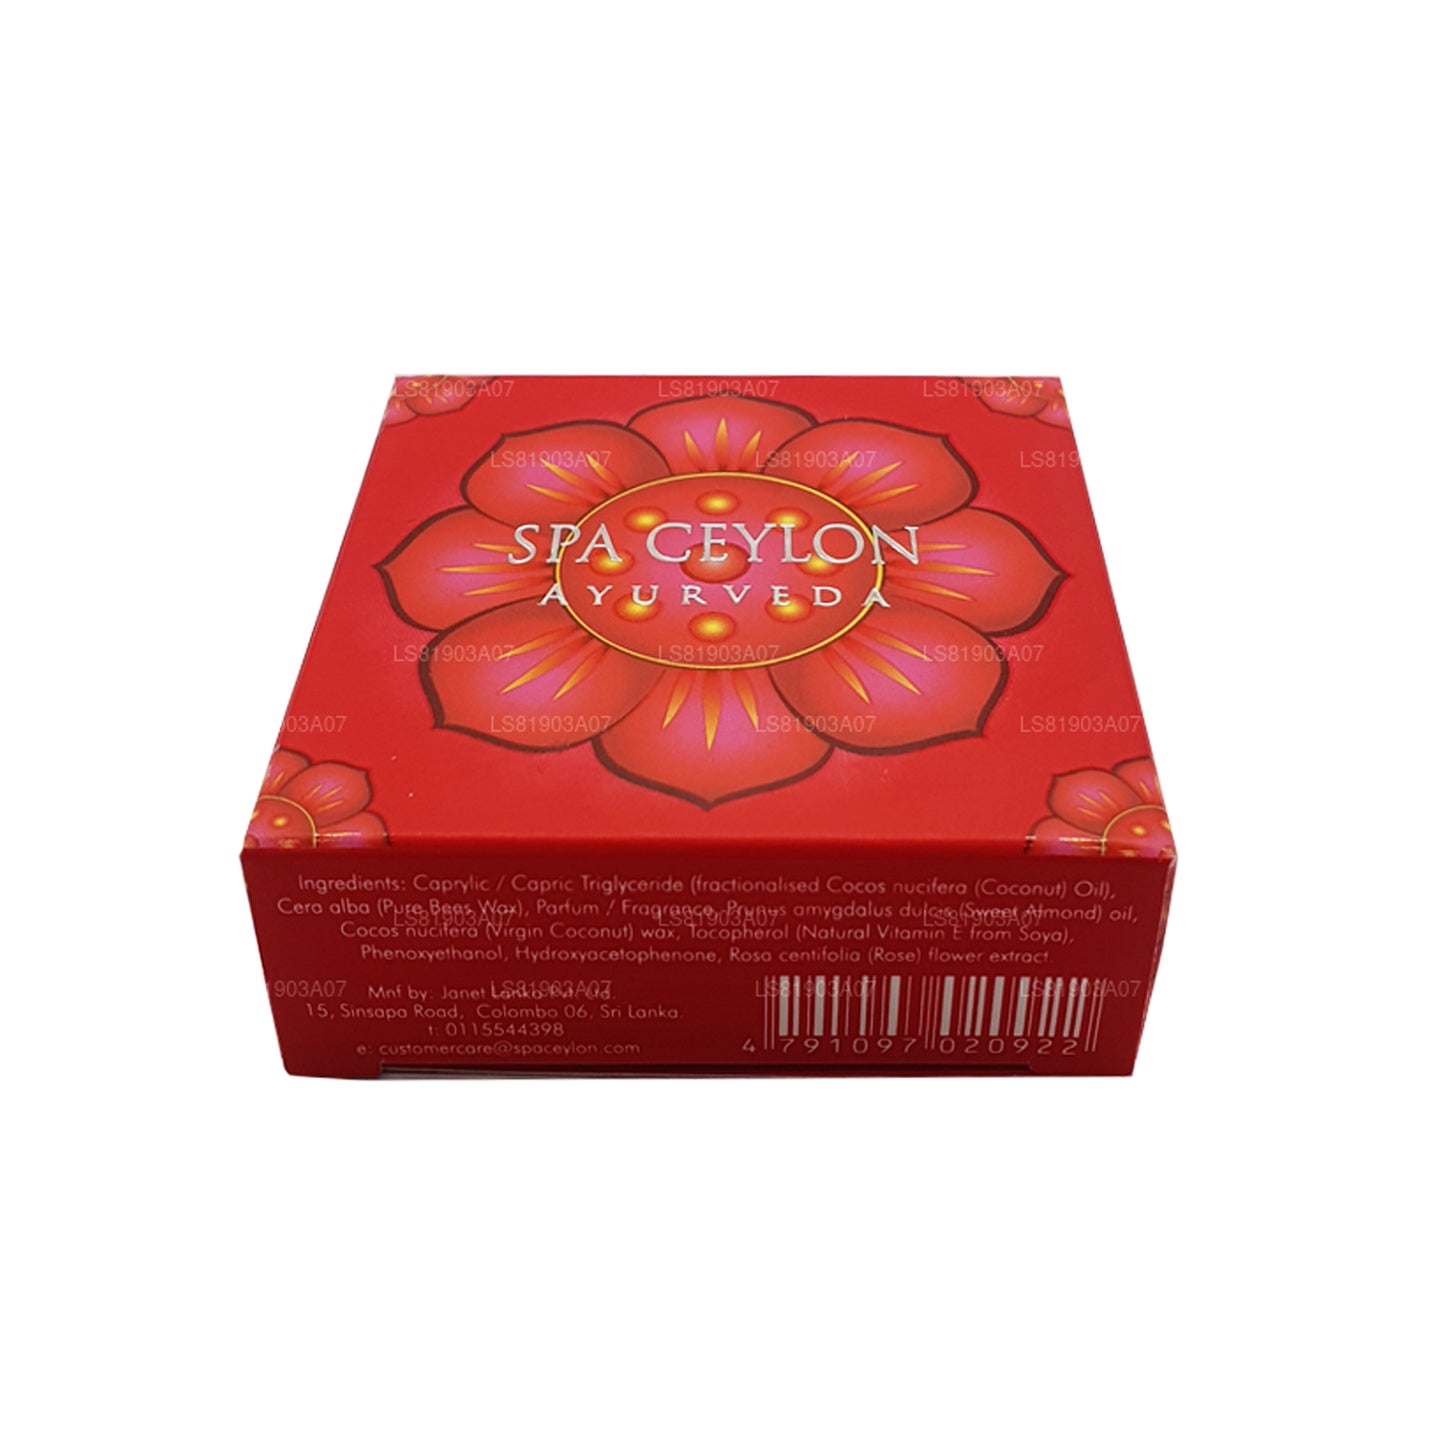 Spa Ceylon Island Rose Solid Perfume (10g)